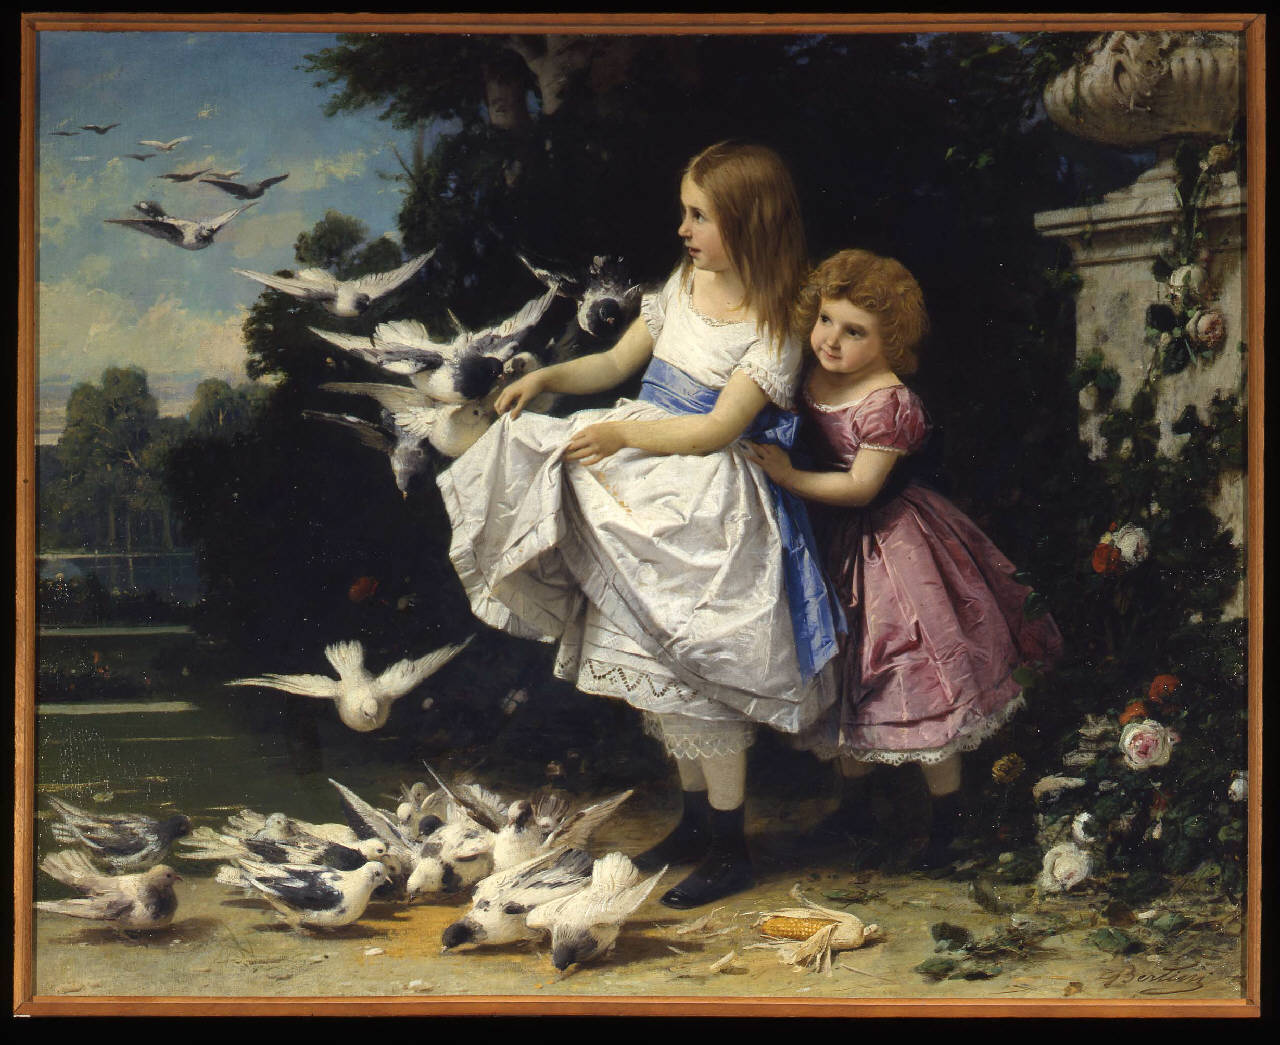 Fanciulle tra colombi in un giardino, fanciulle in giardino con colombi (dipinto) di Bertini Giuseppe (terzo quarto sec. XIX)